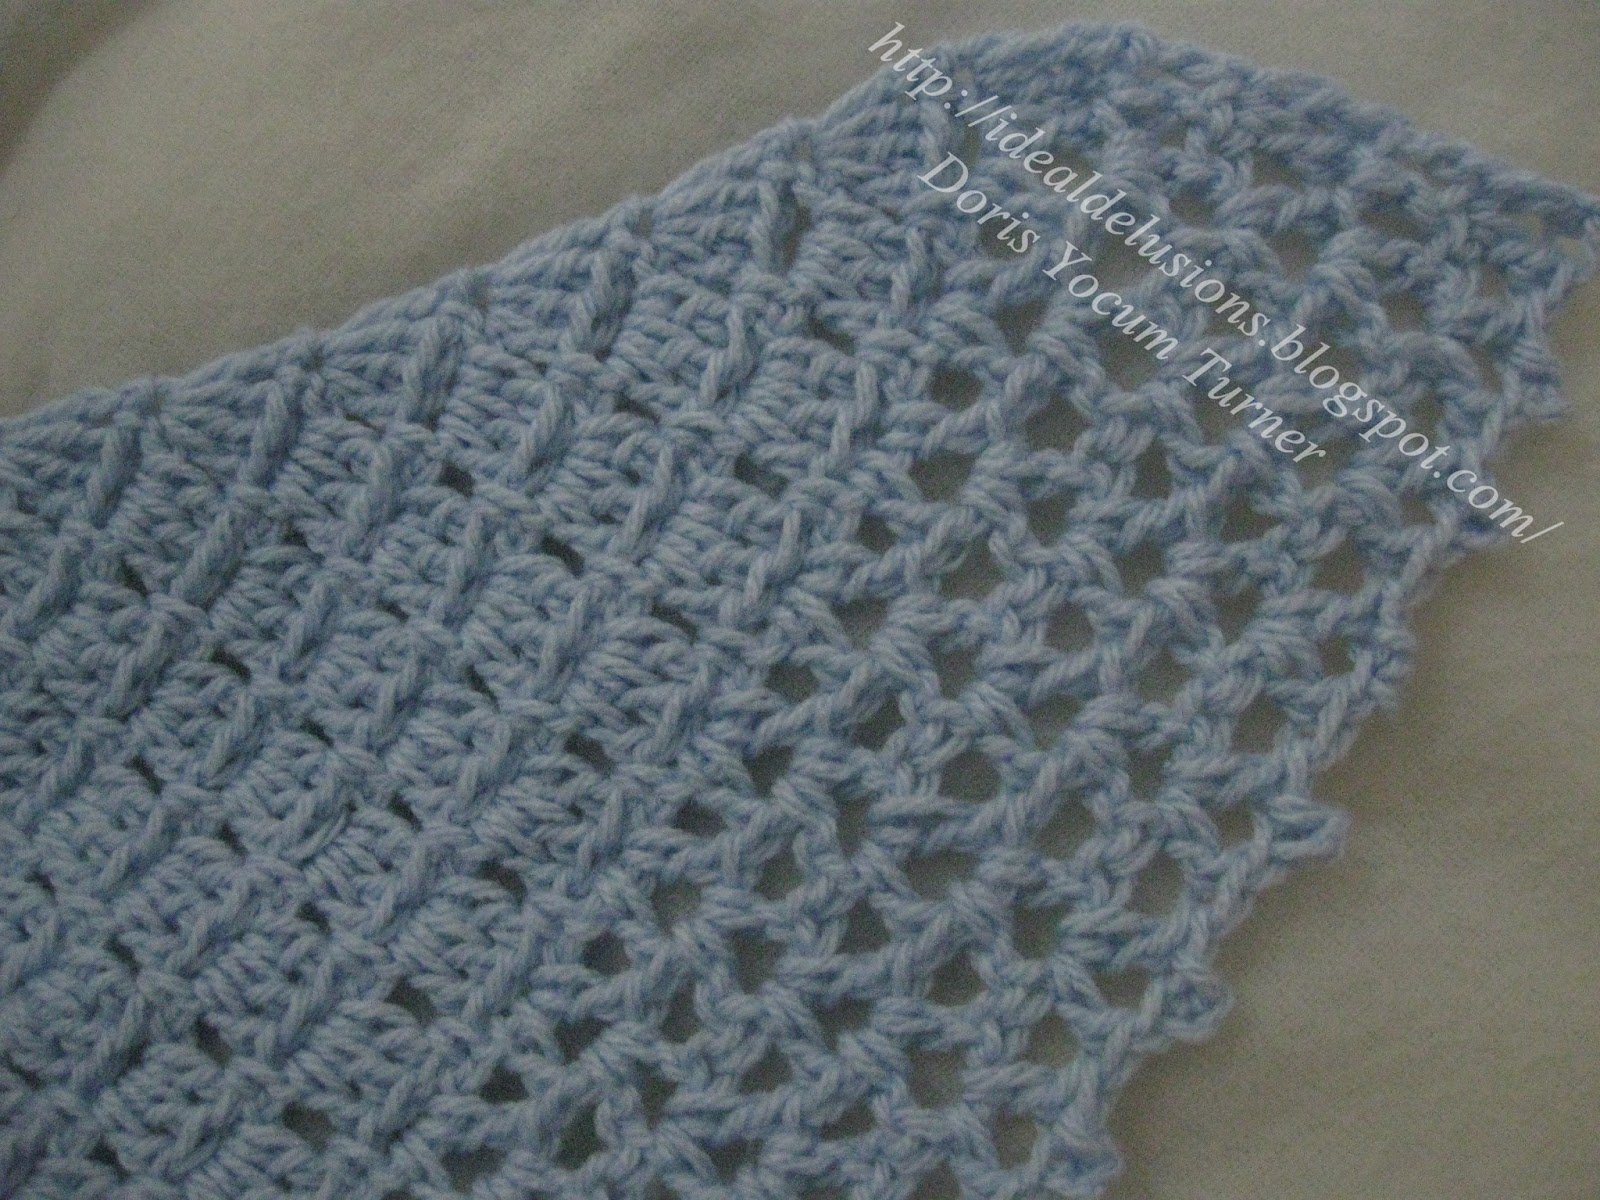 Crochet Shawl Blocking Tips & Tutorial — Stitch & Hustle